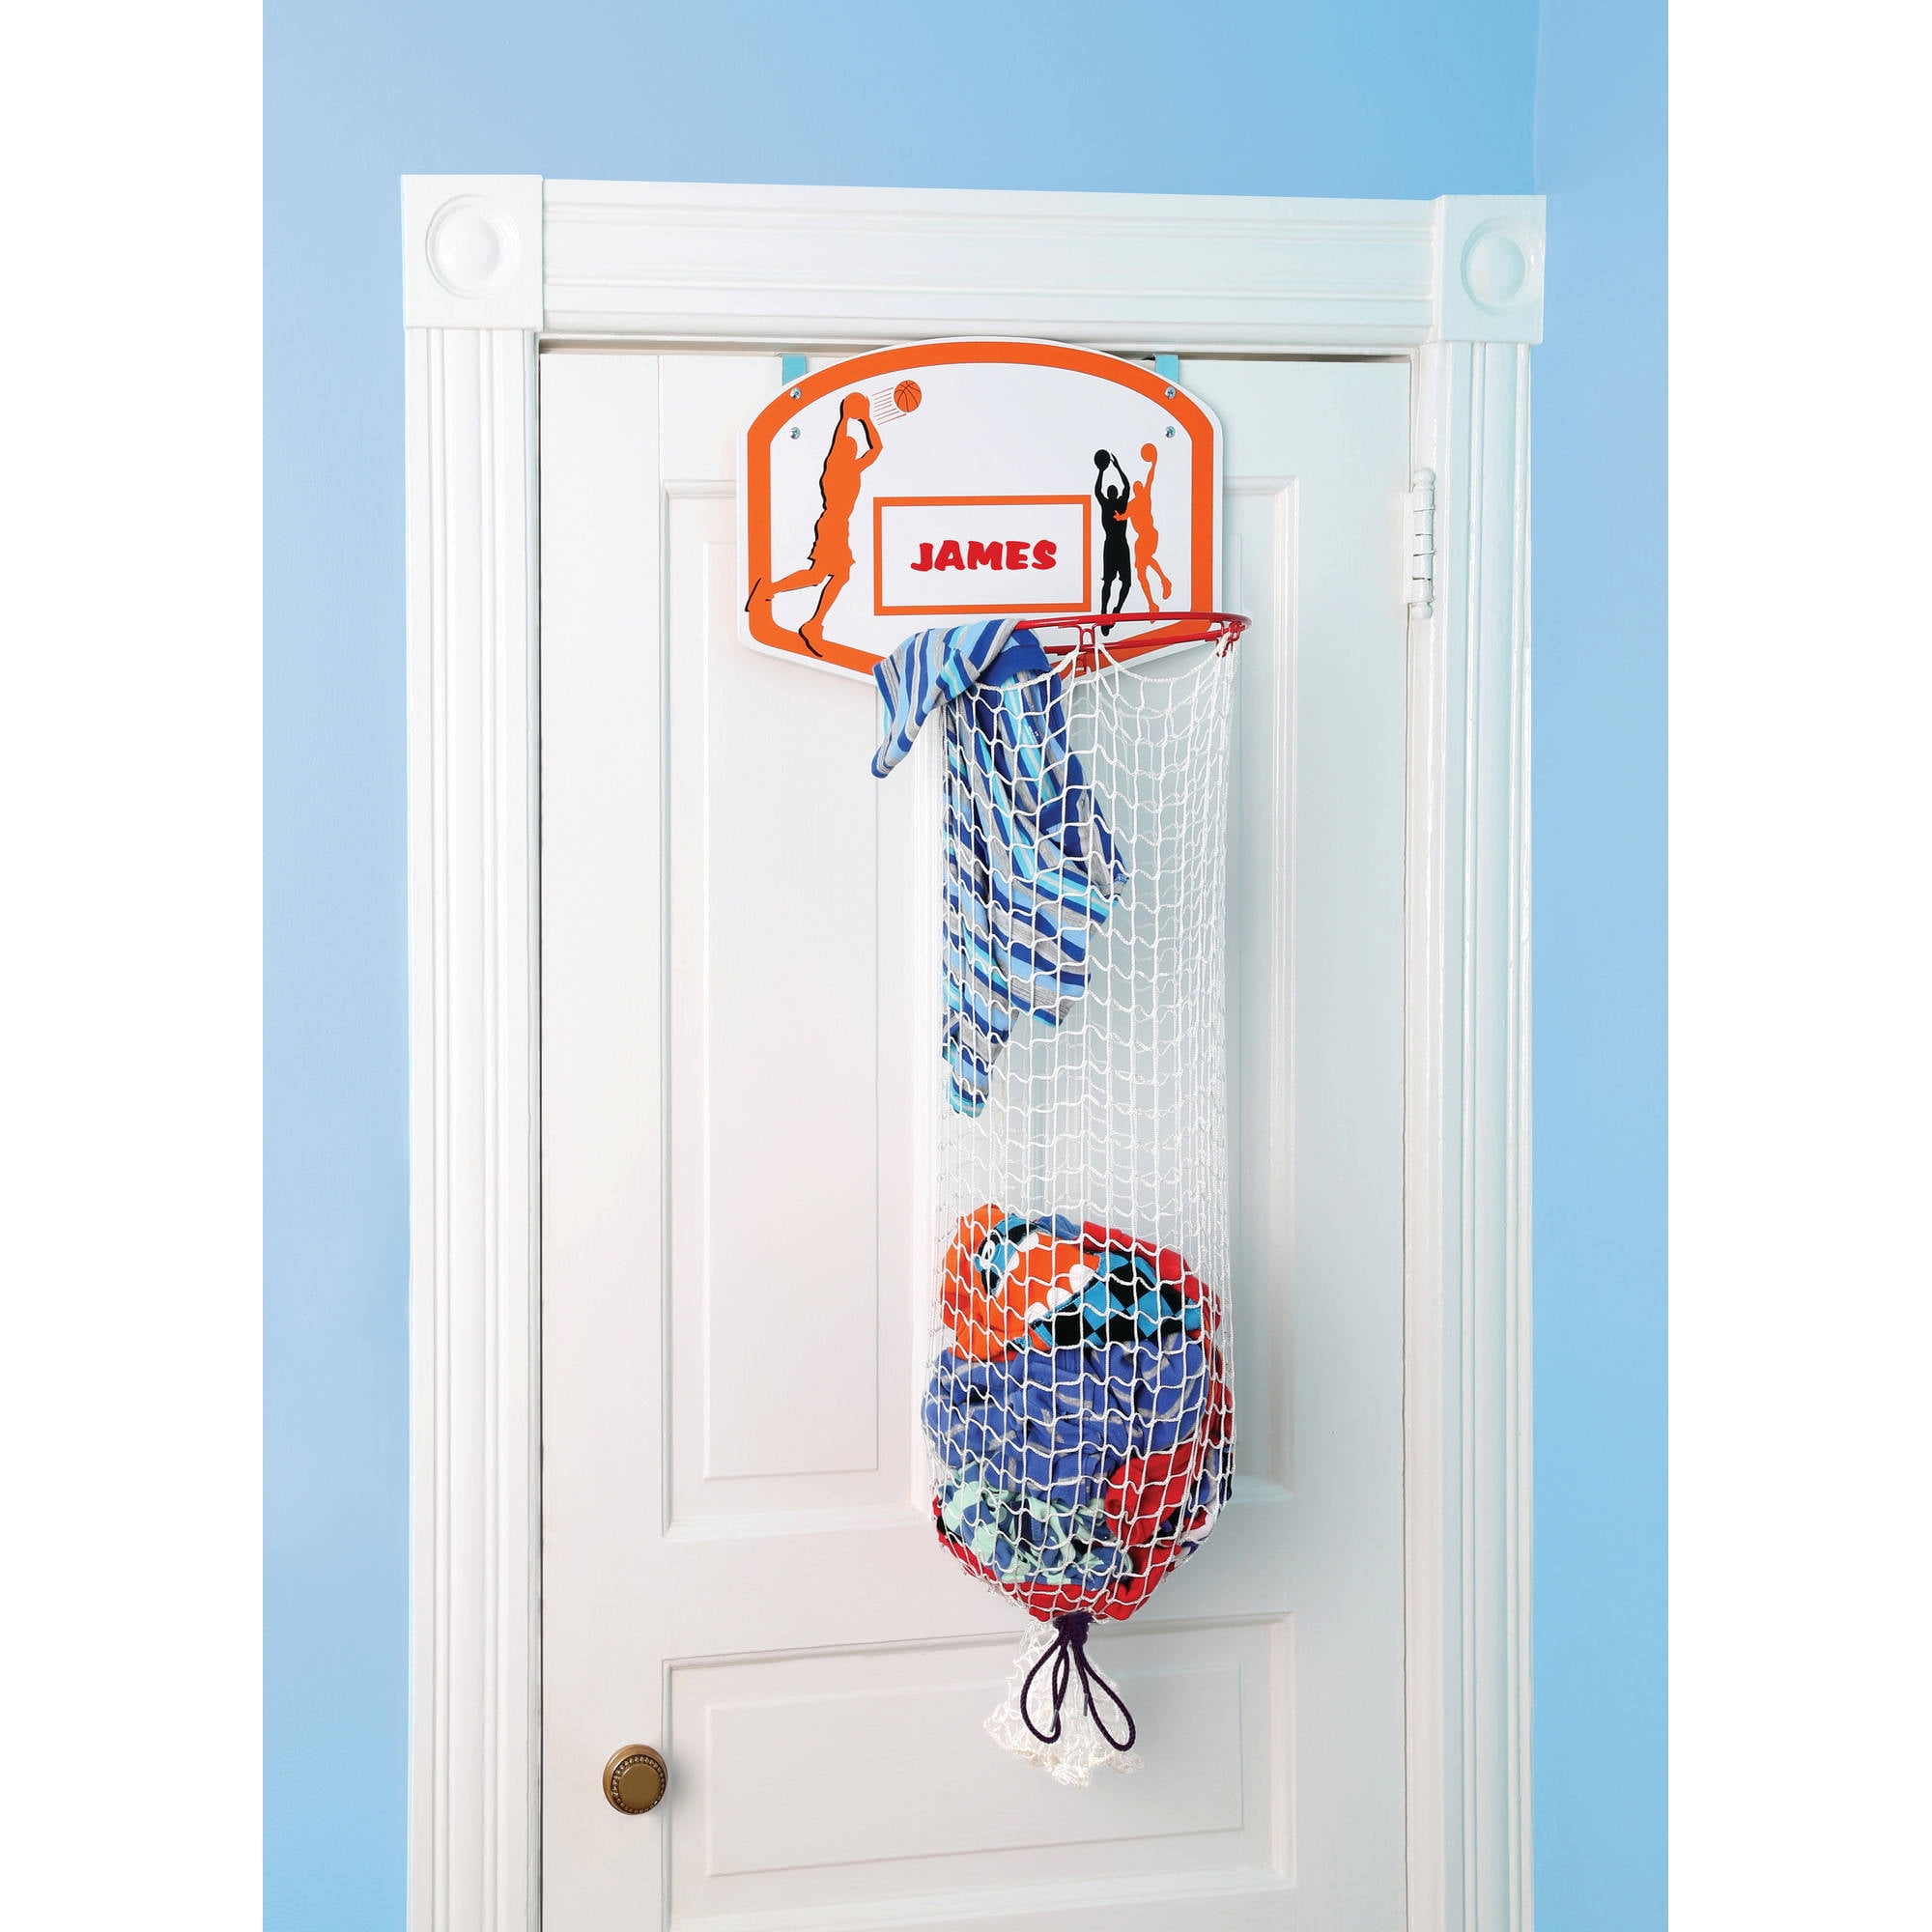 Dunkers Hanging Basketball Hamper Fun Basketball Room Hanging Laundry Hamper 